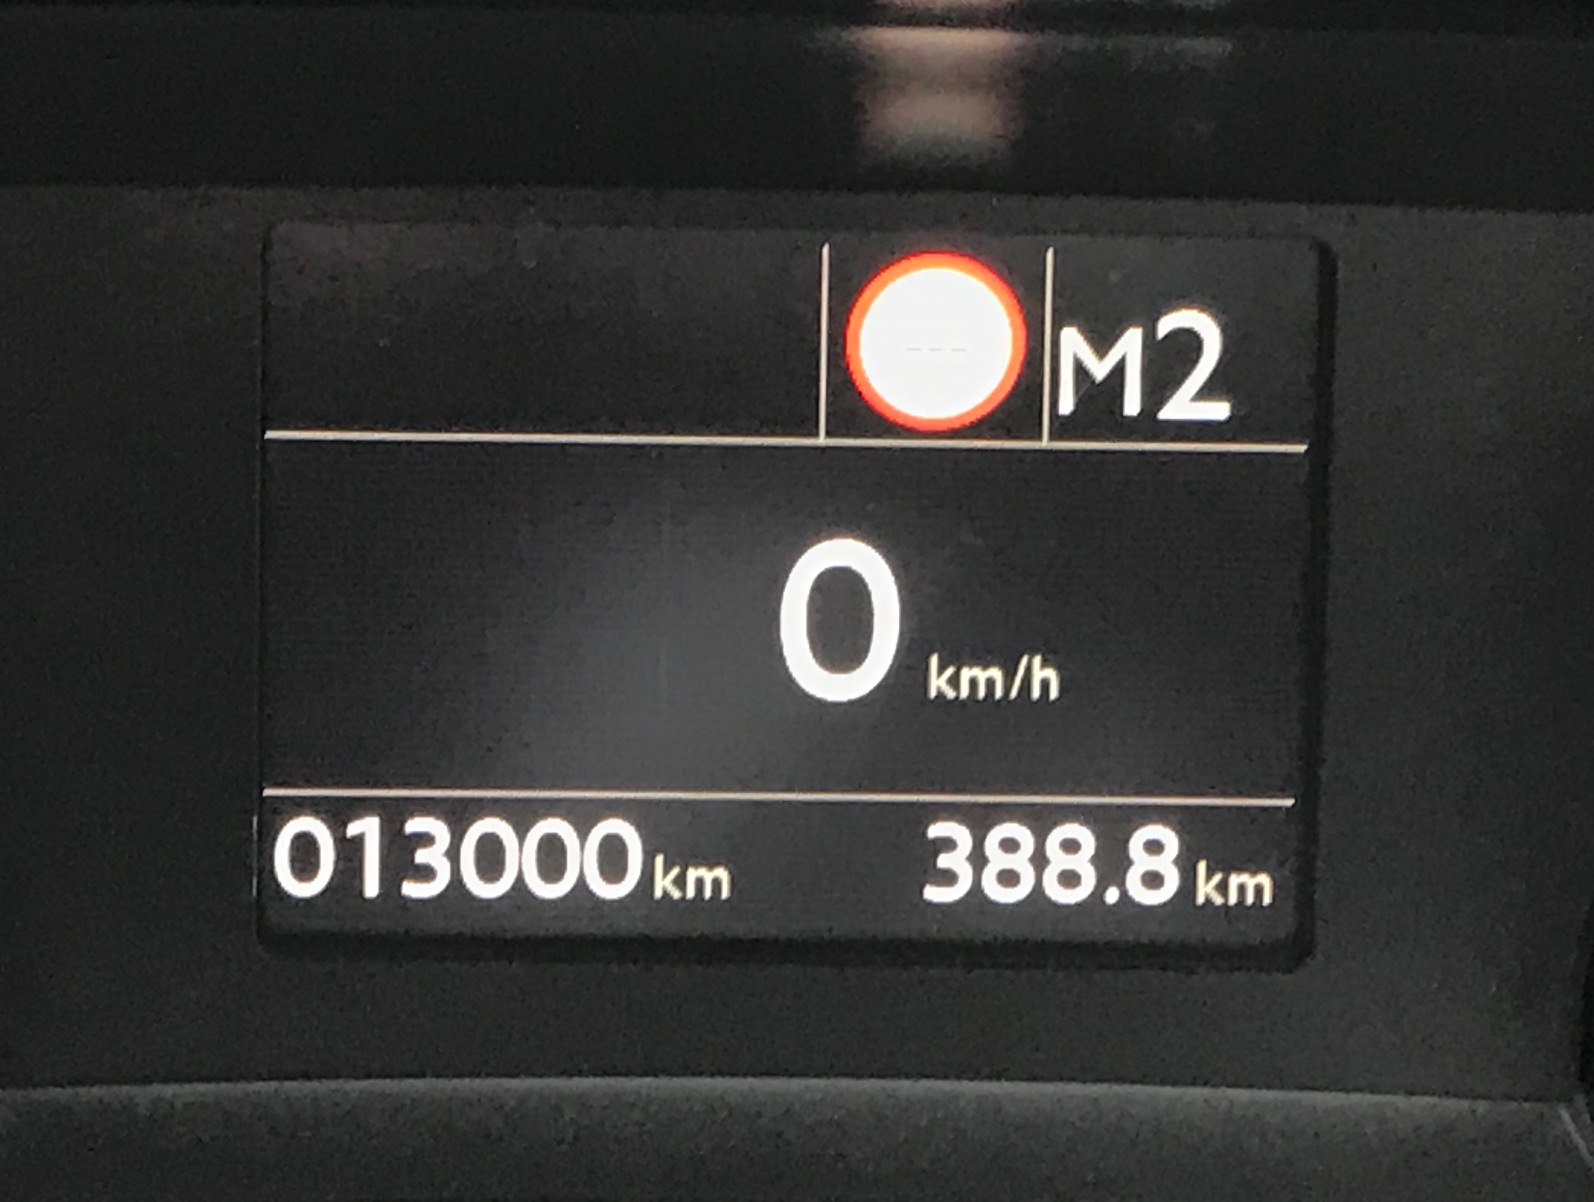 13,000km